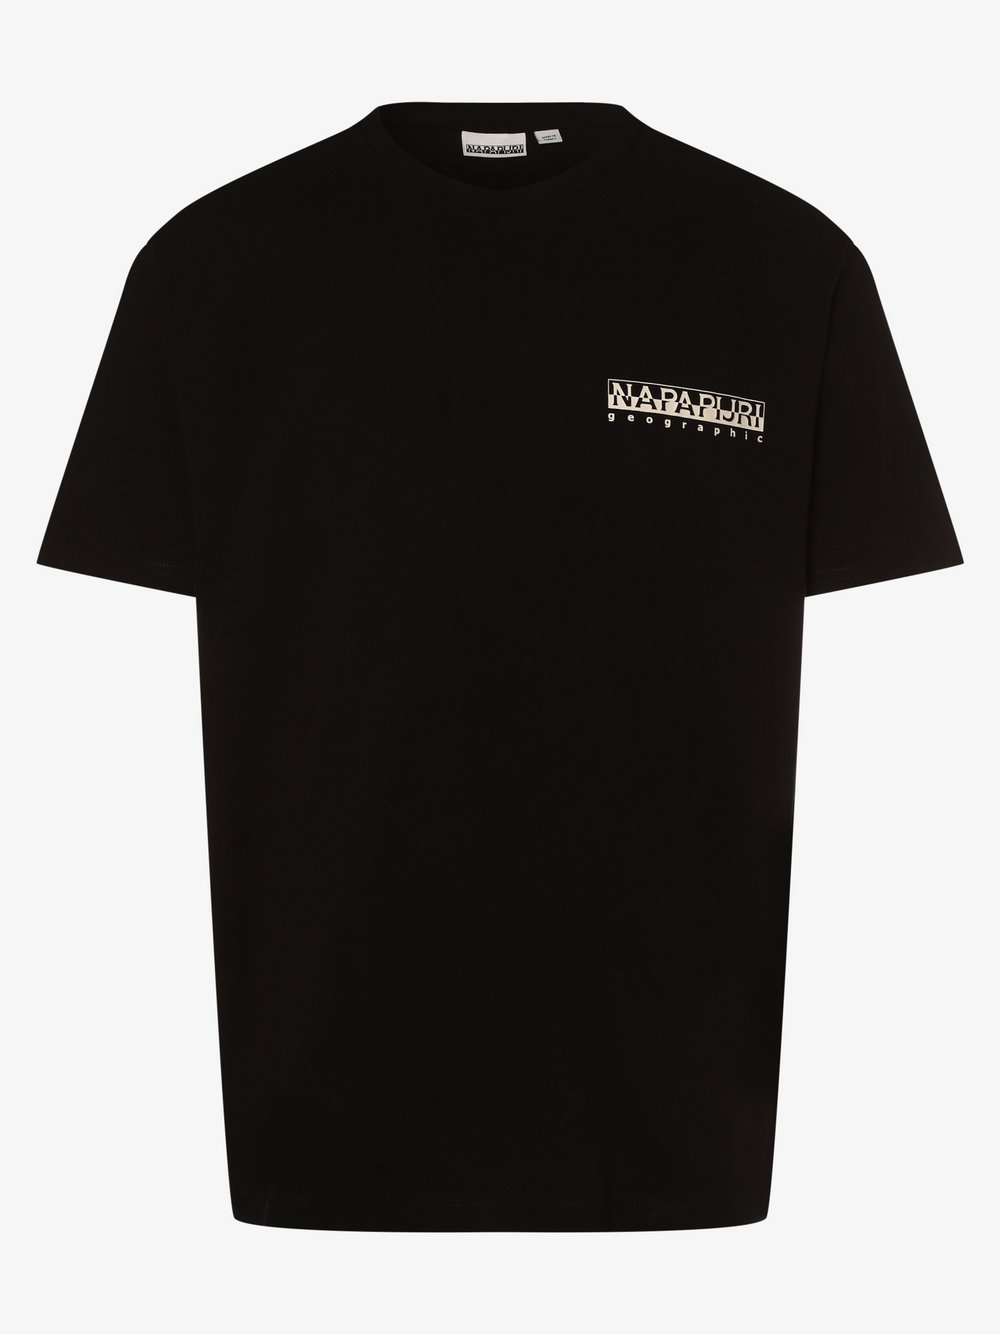 Napapijri - T-shirt męski – S-Latemar, czarny